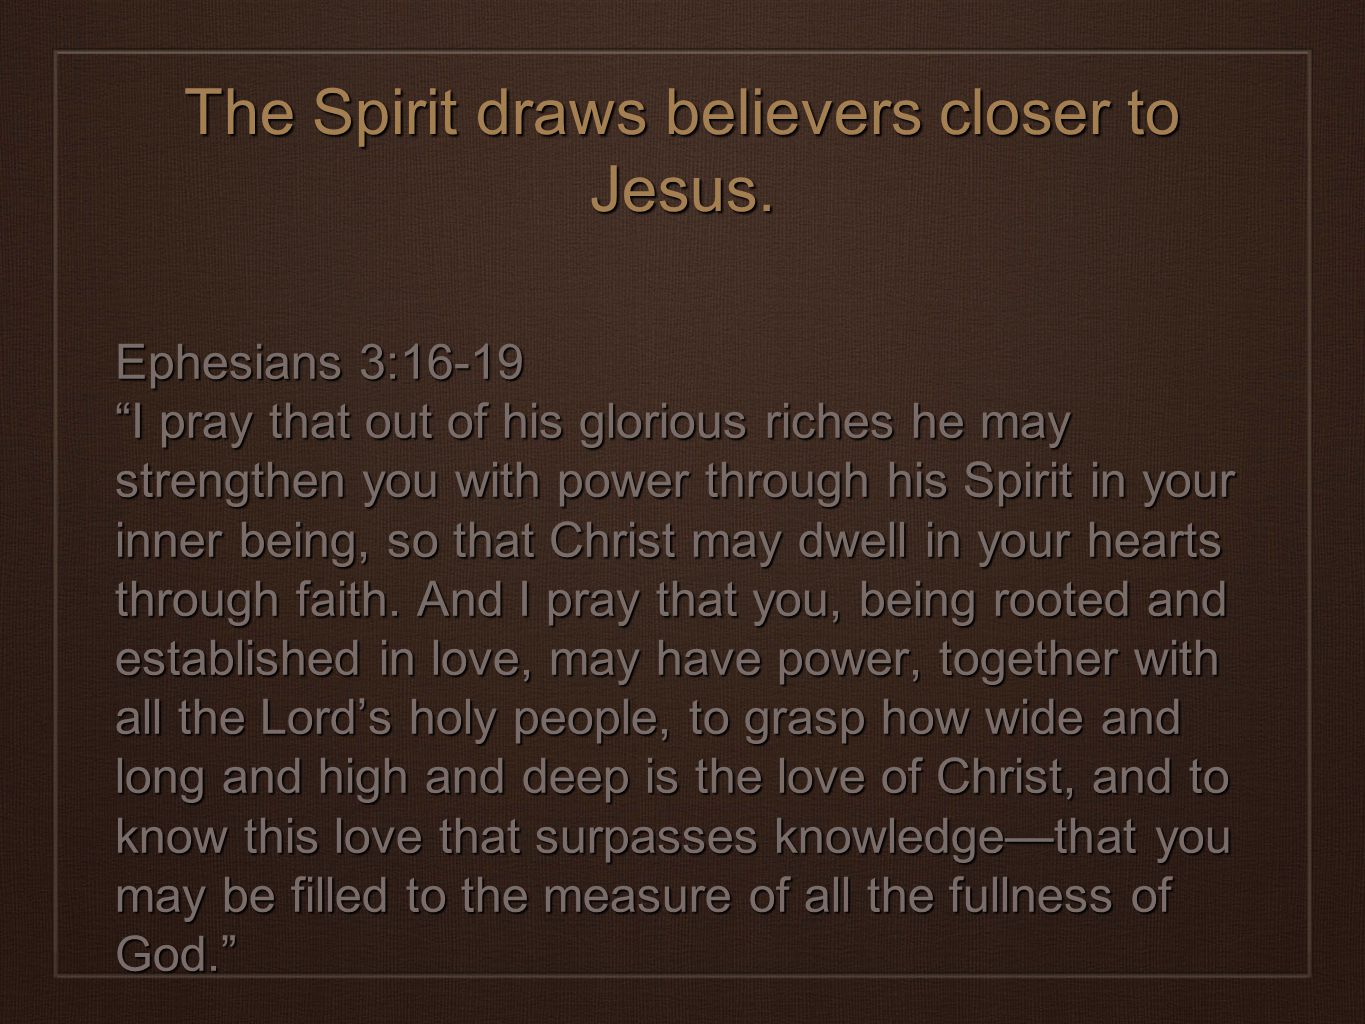 The Spirit draws believers closer to Jesus.